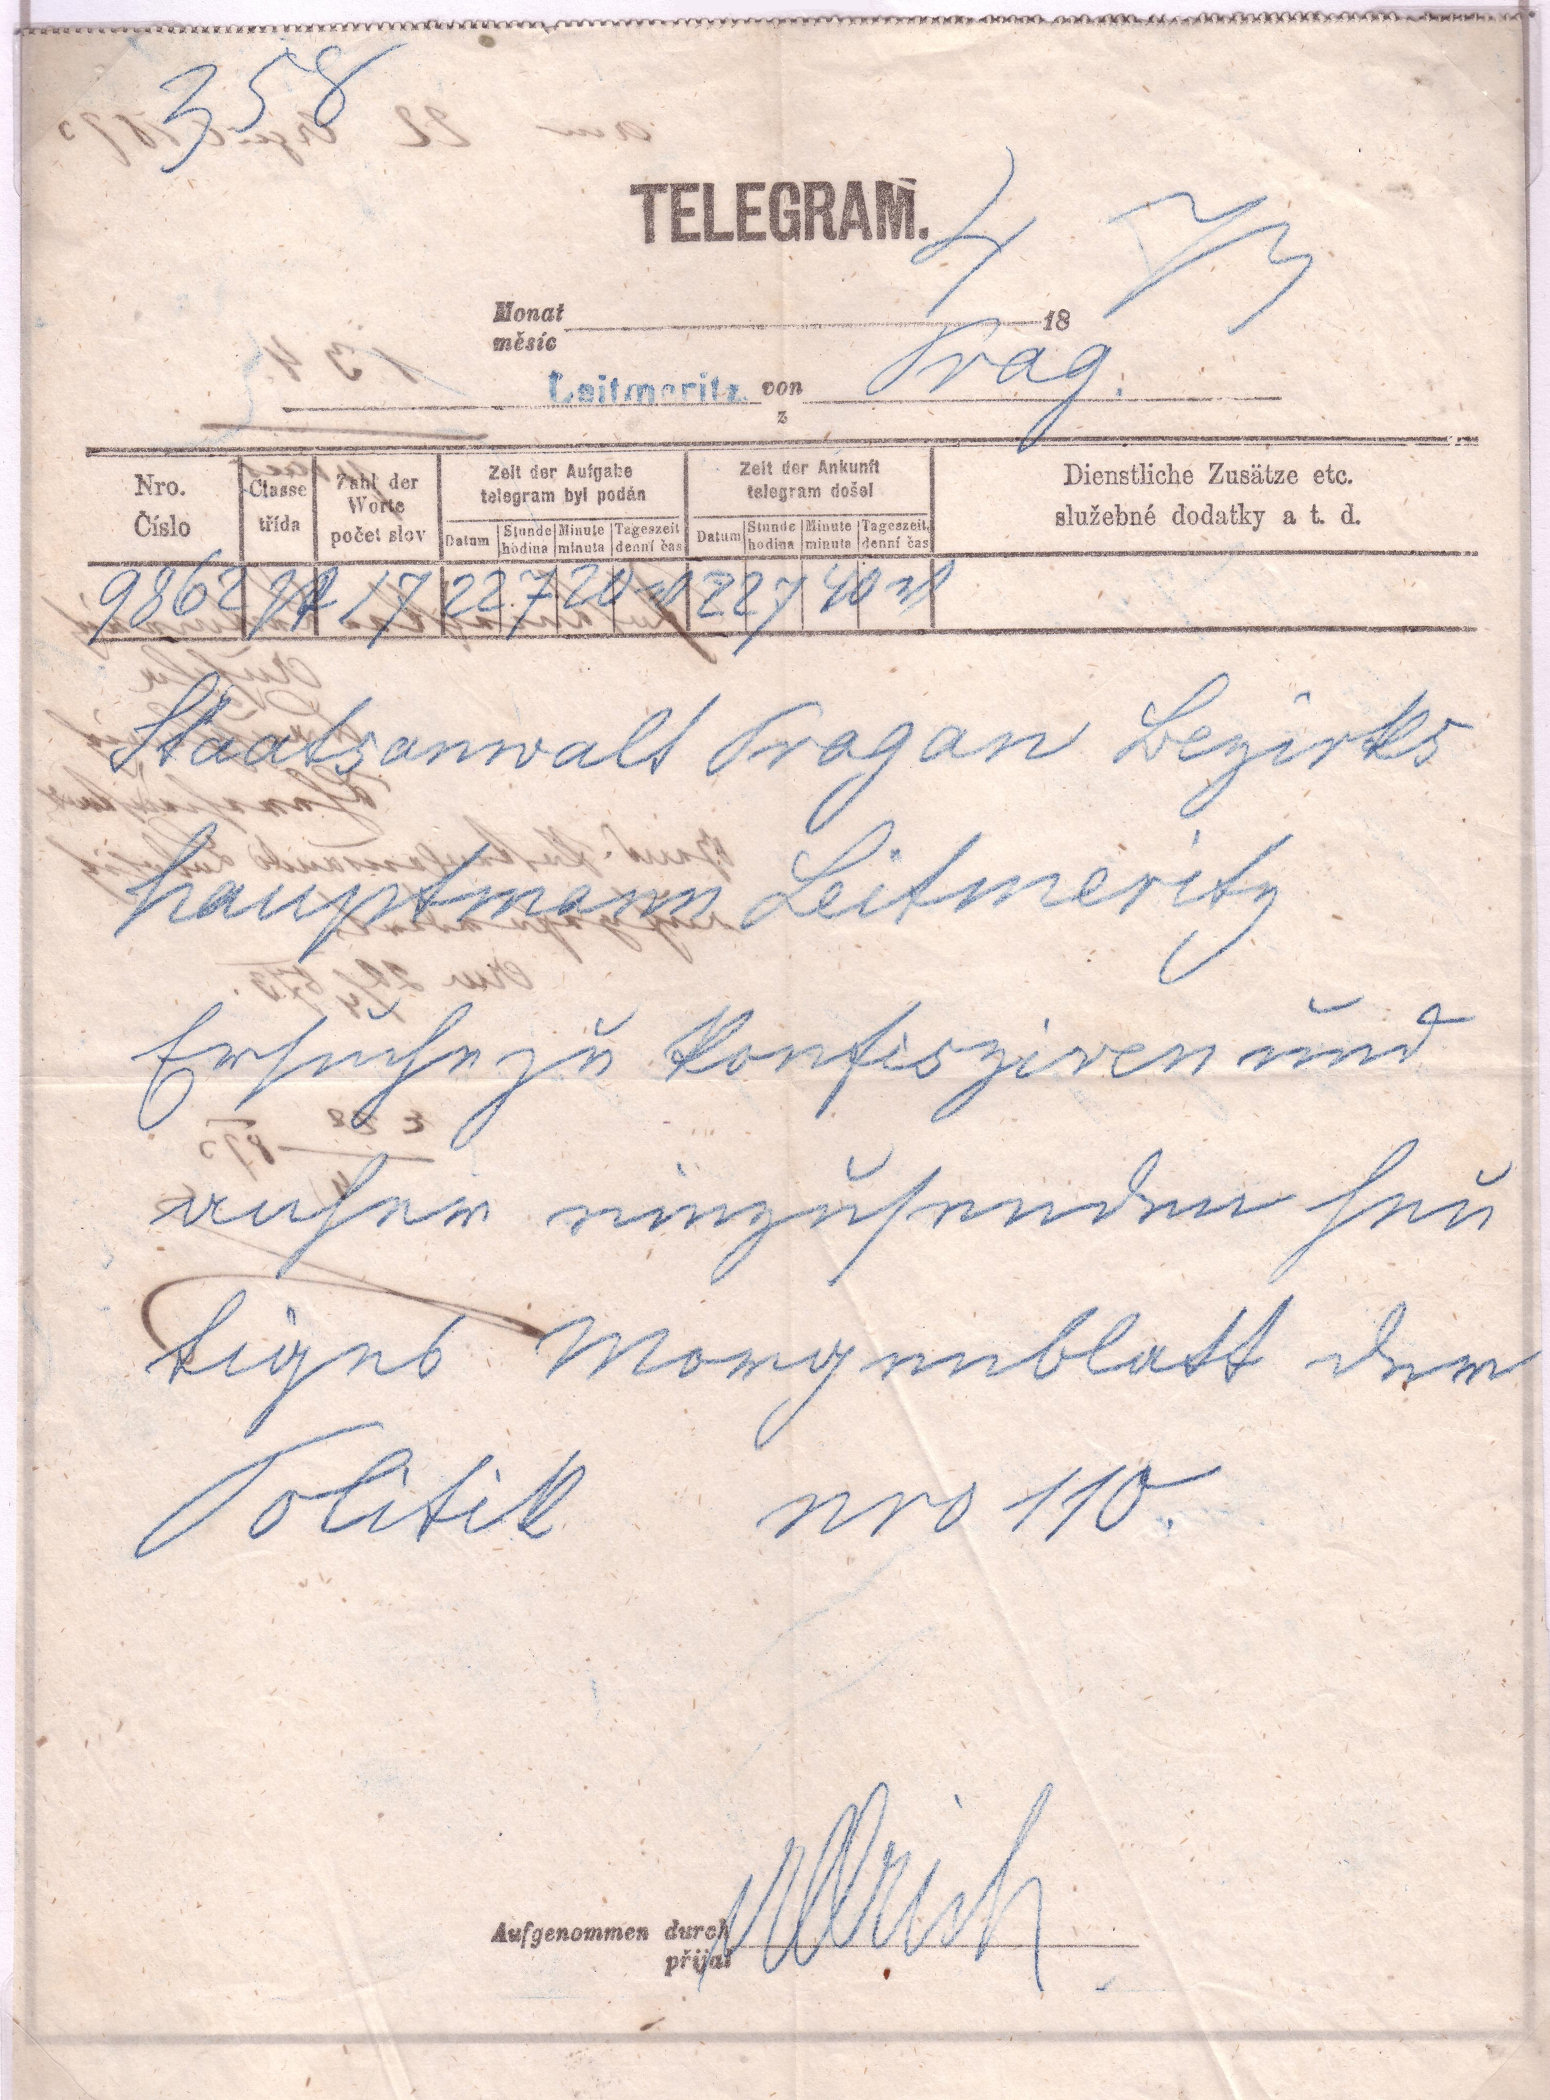 Telegram Form - 1873